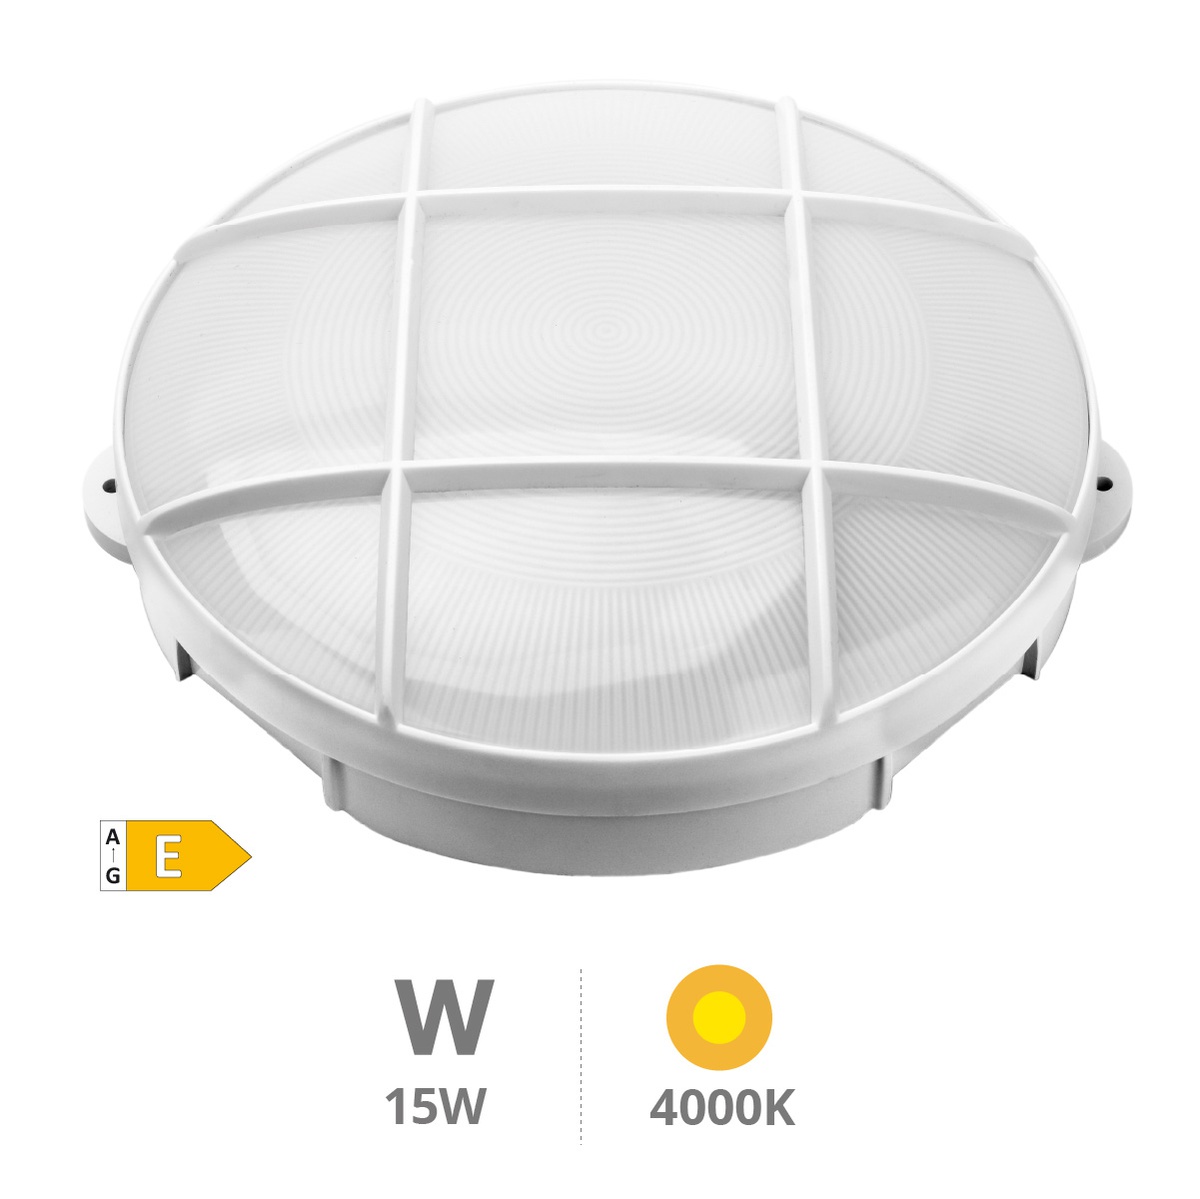 Oxalis LED bulkhead light 15W 4000K White